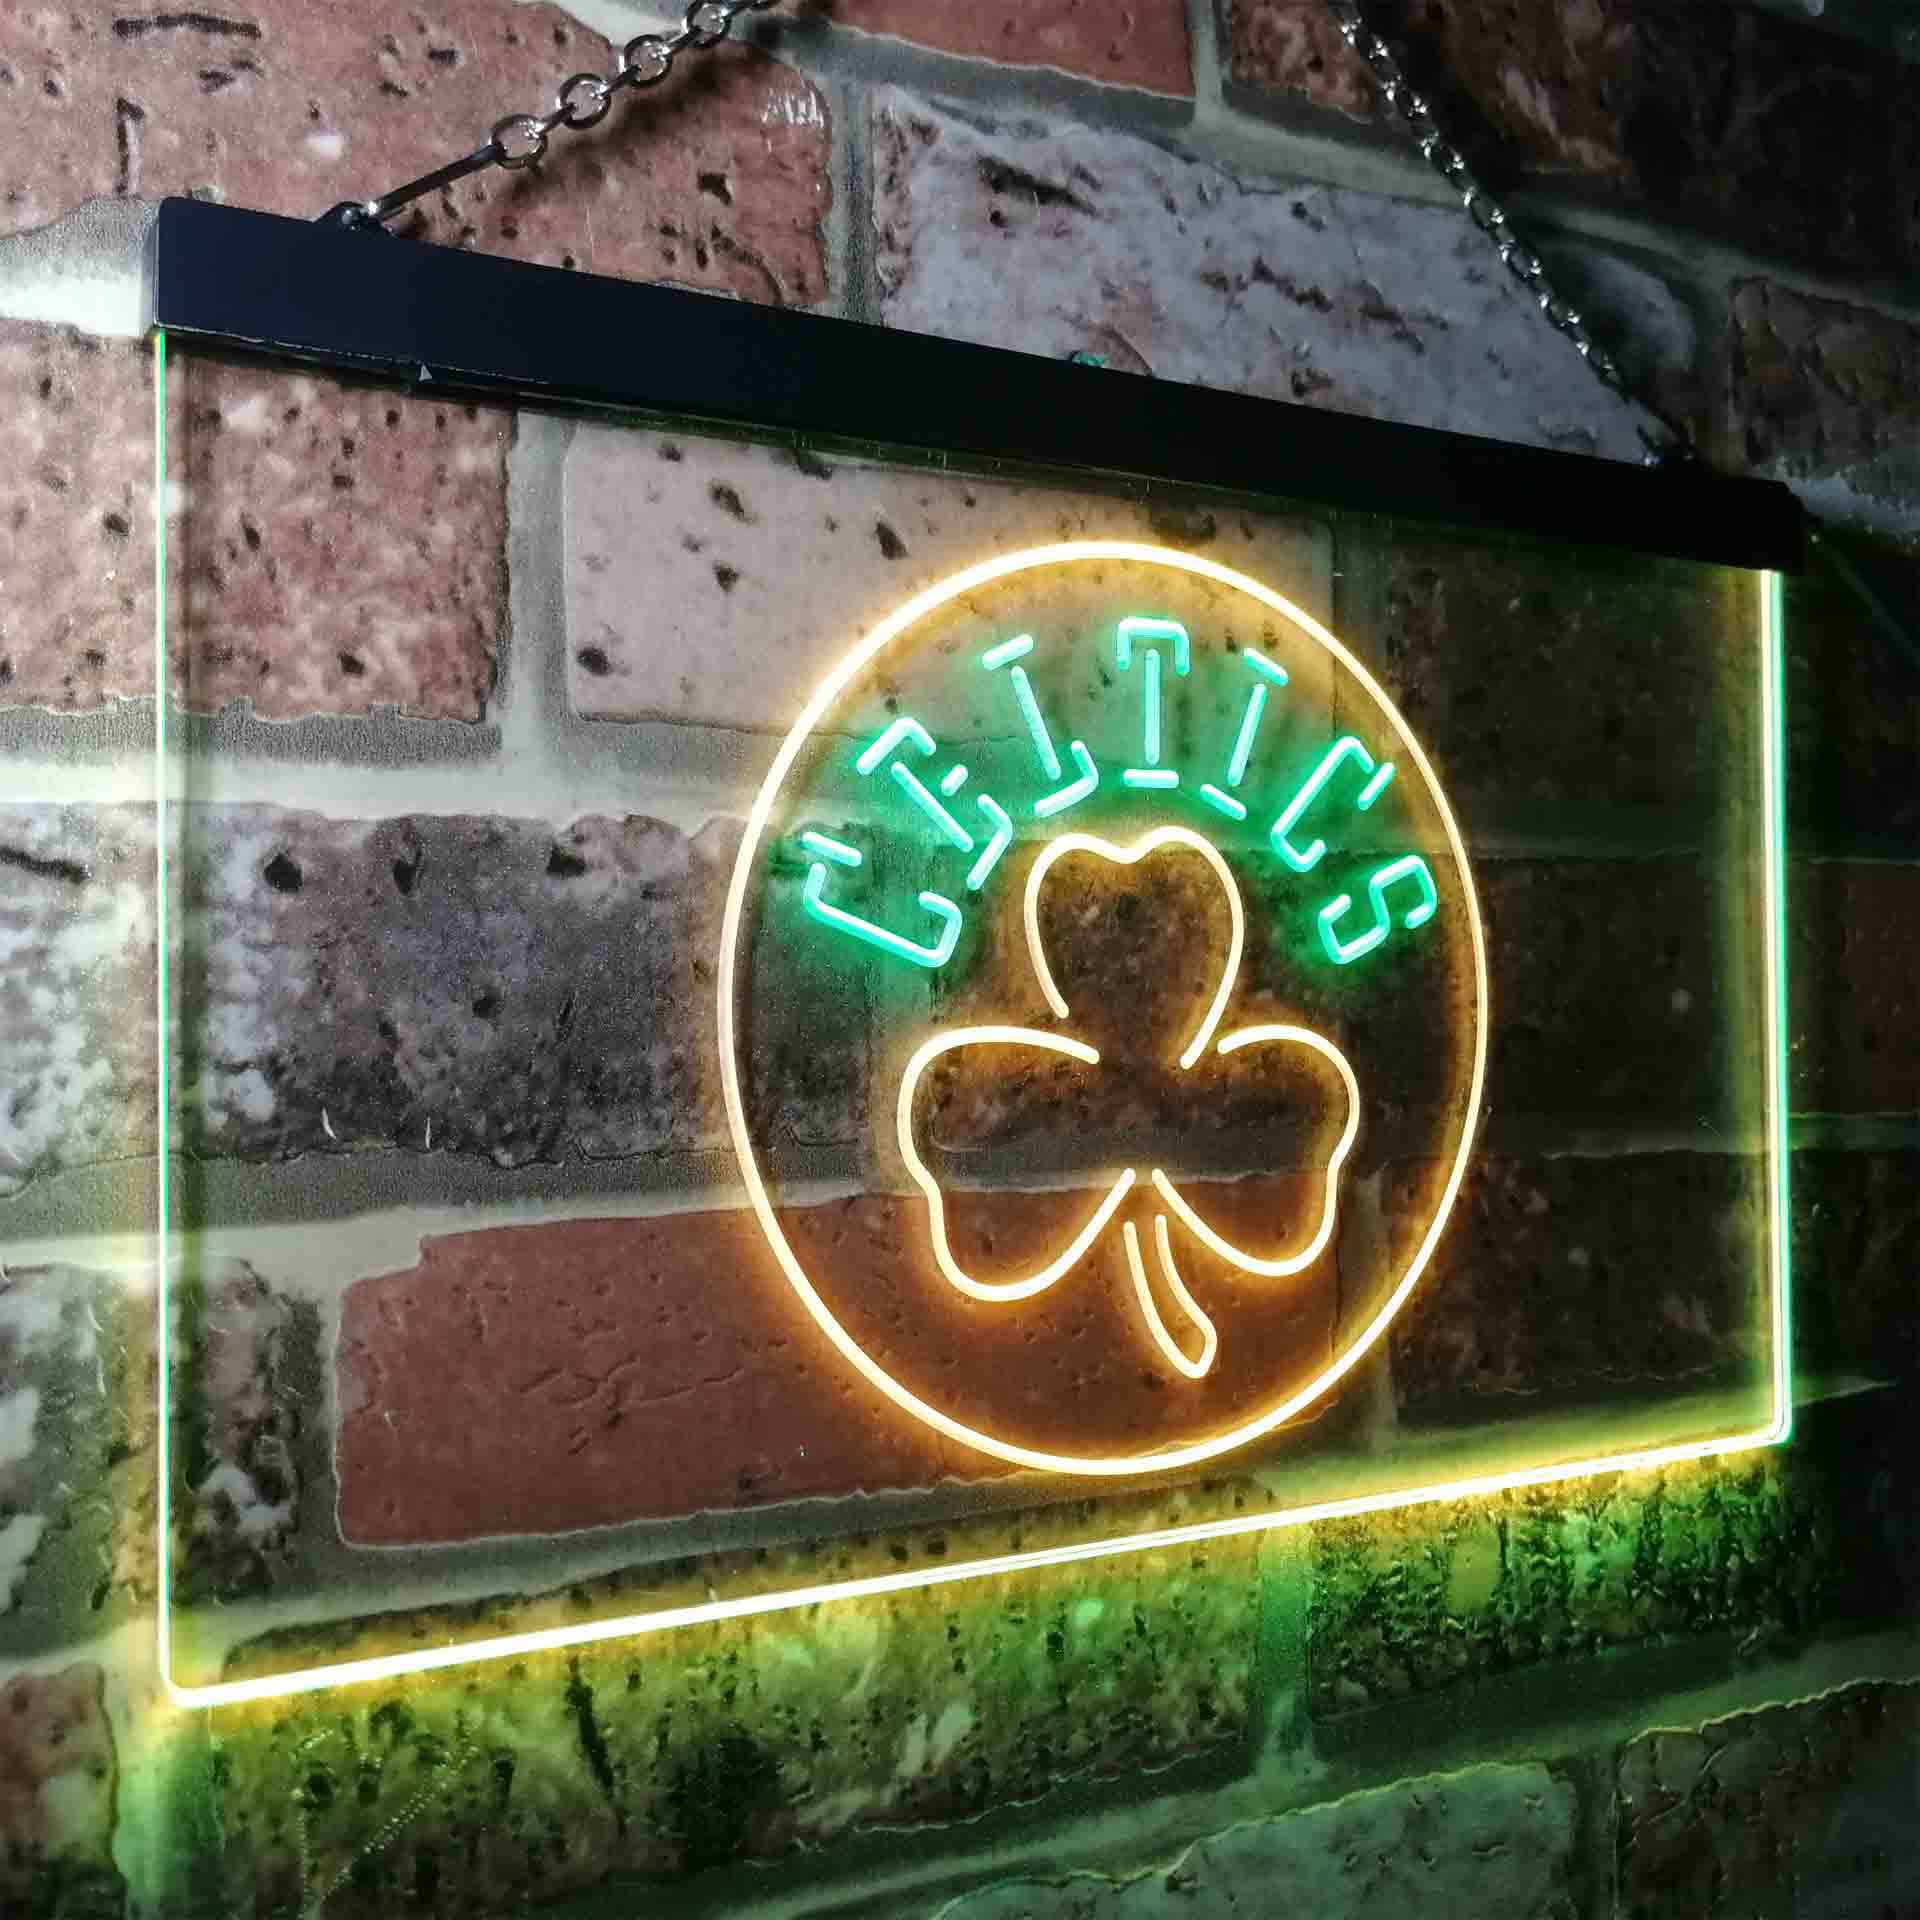 Boston Celtics Neon-Like LED Sign